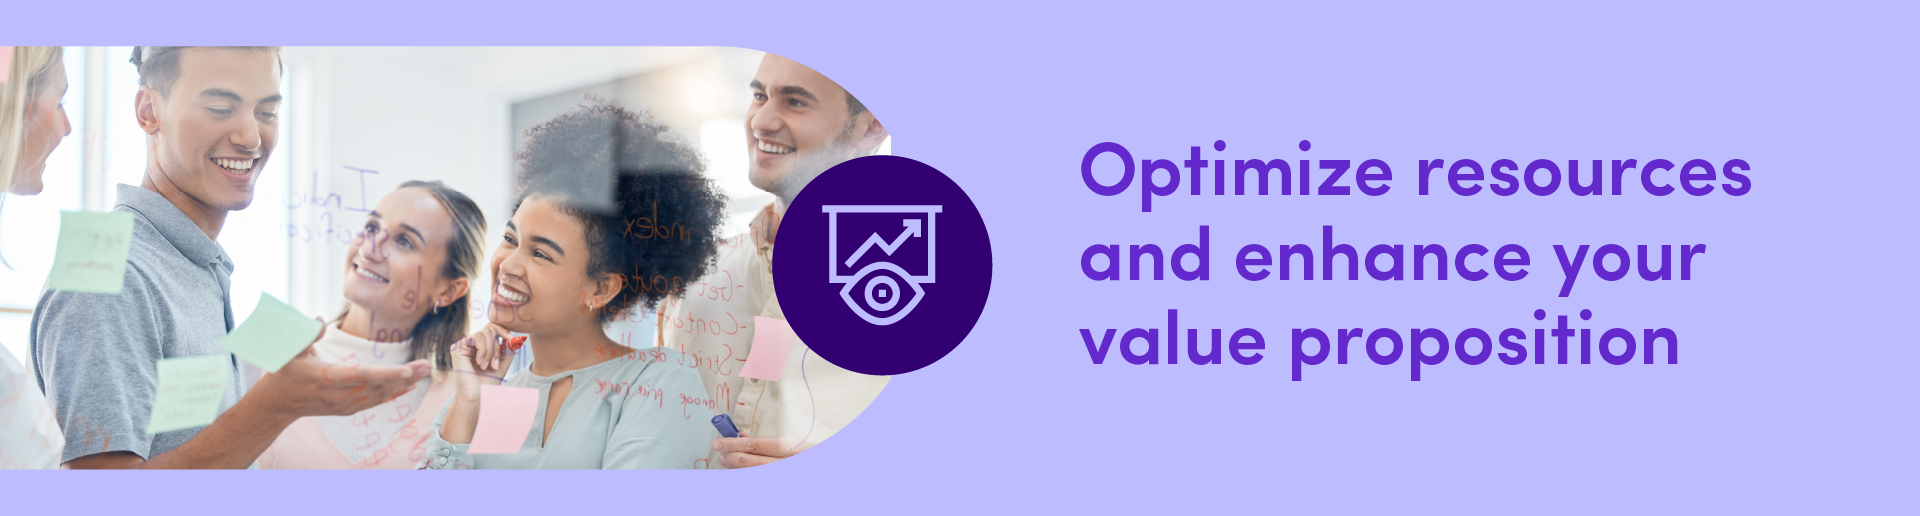 Optimize resourcesand enhance your value proposition